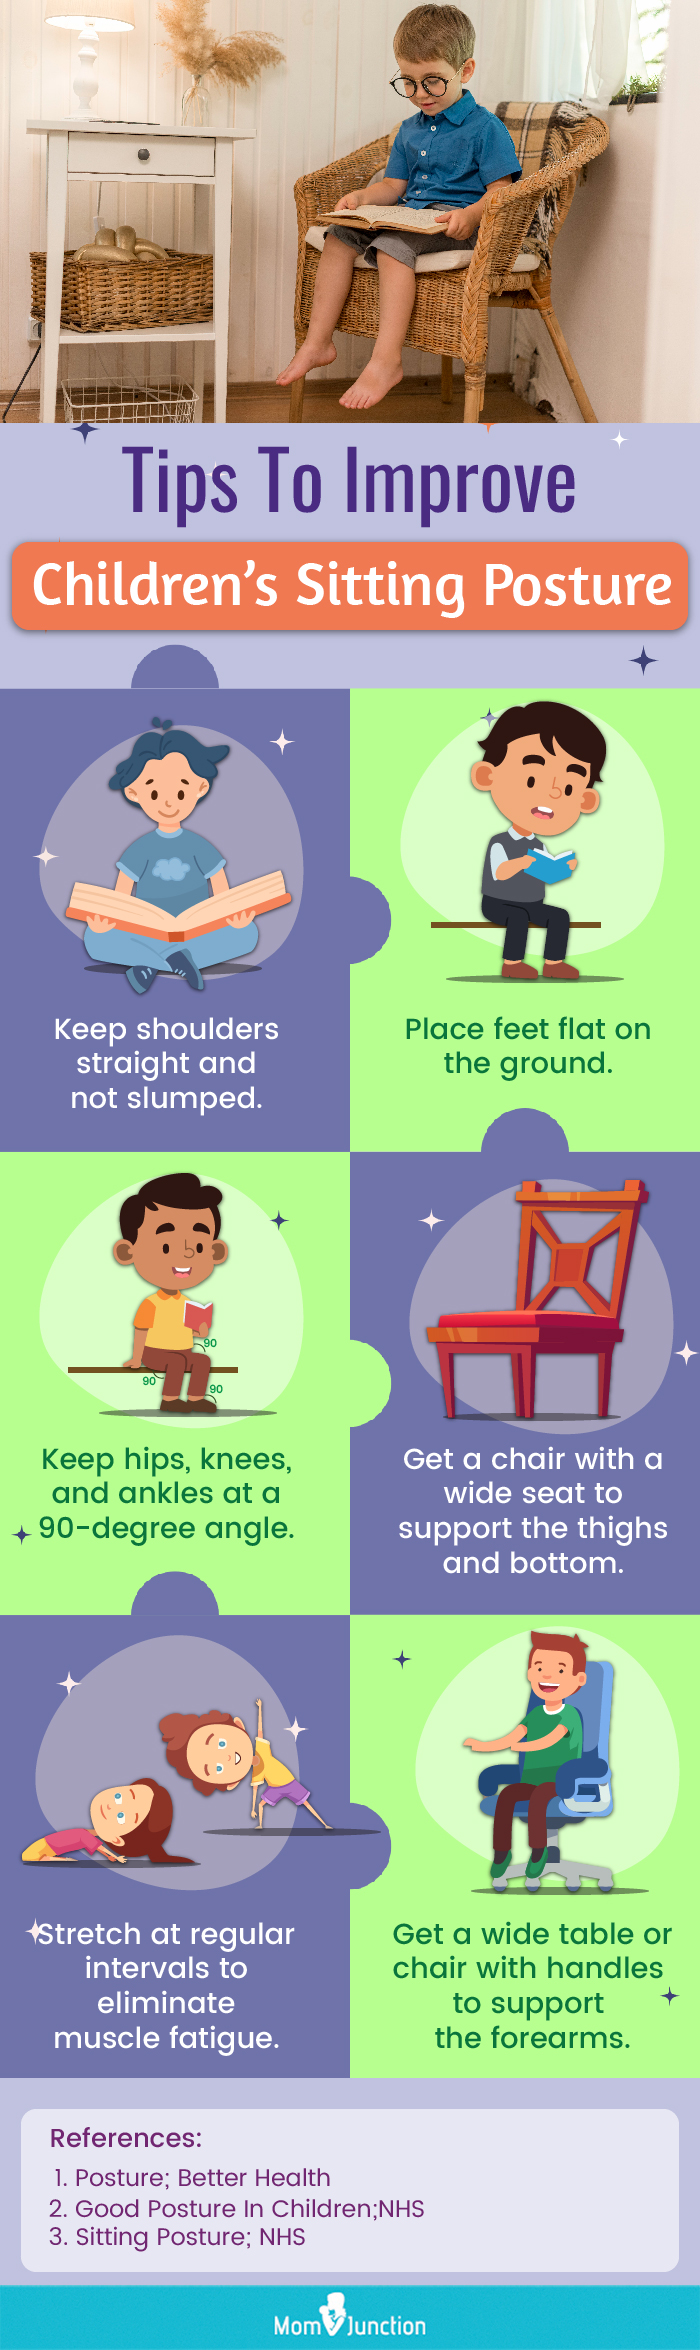 Tips To Improve Children’s Sitting Posture (infographic)